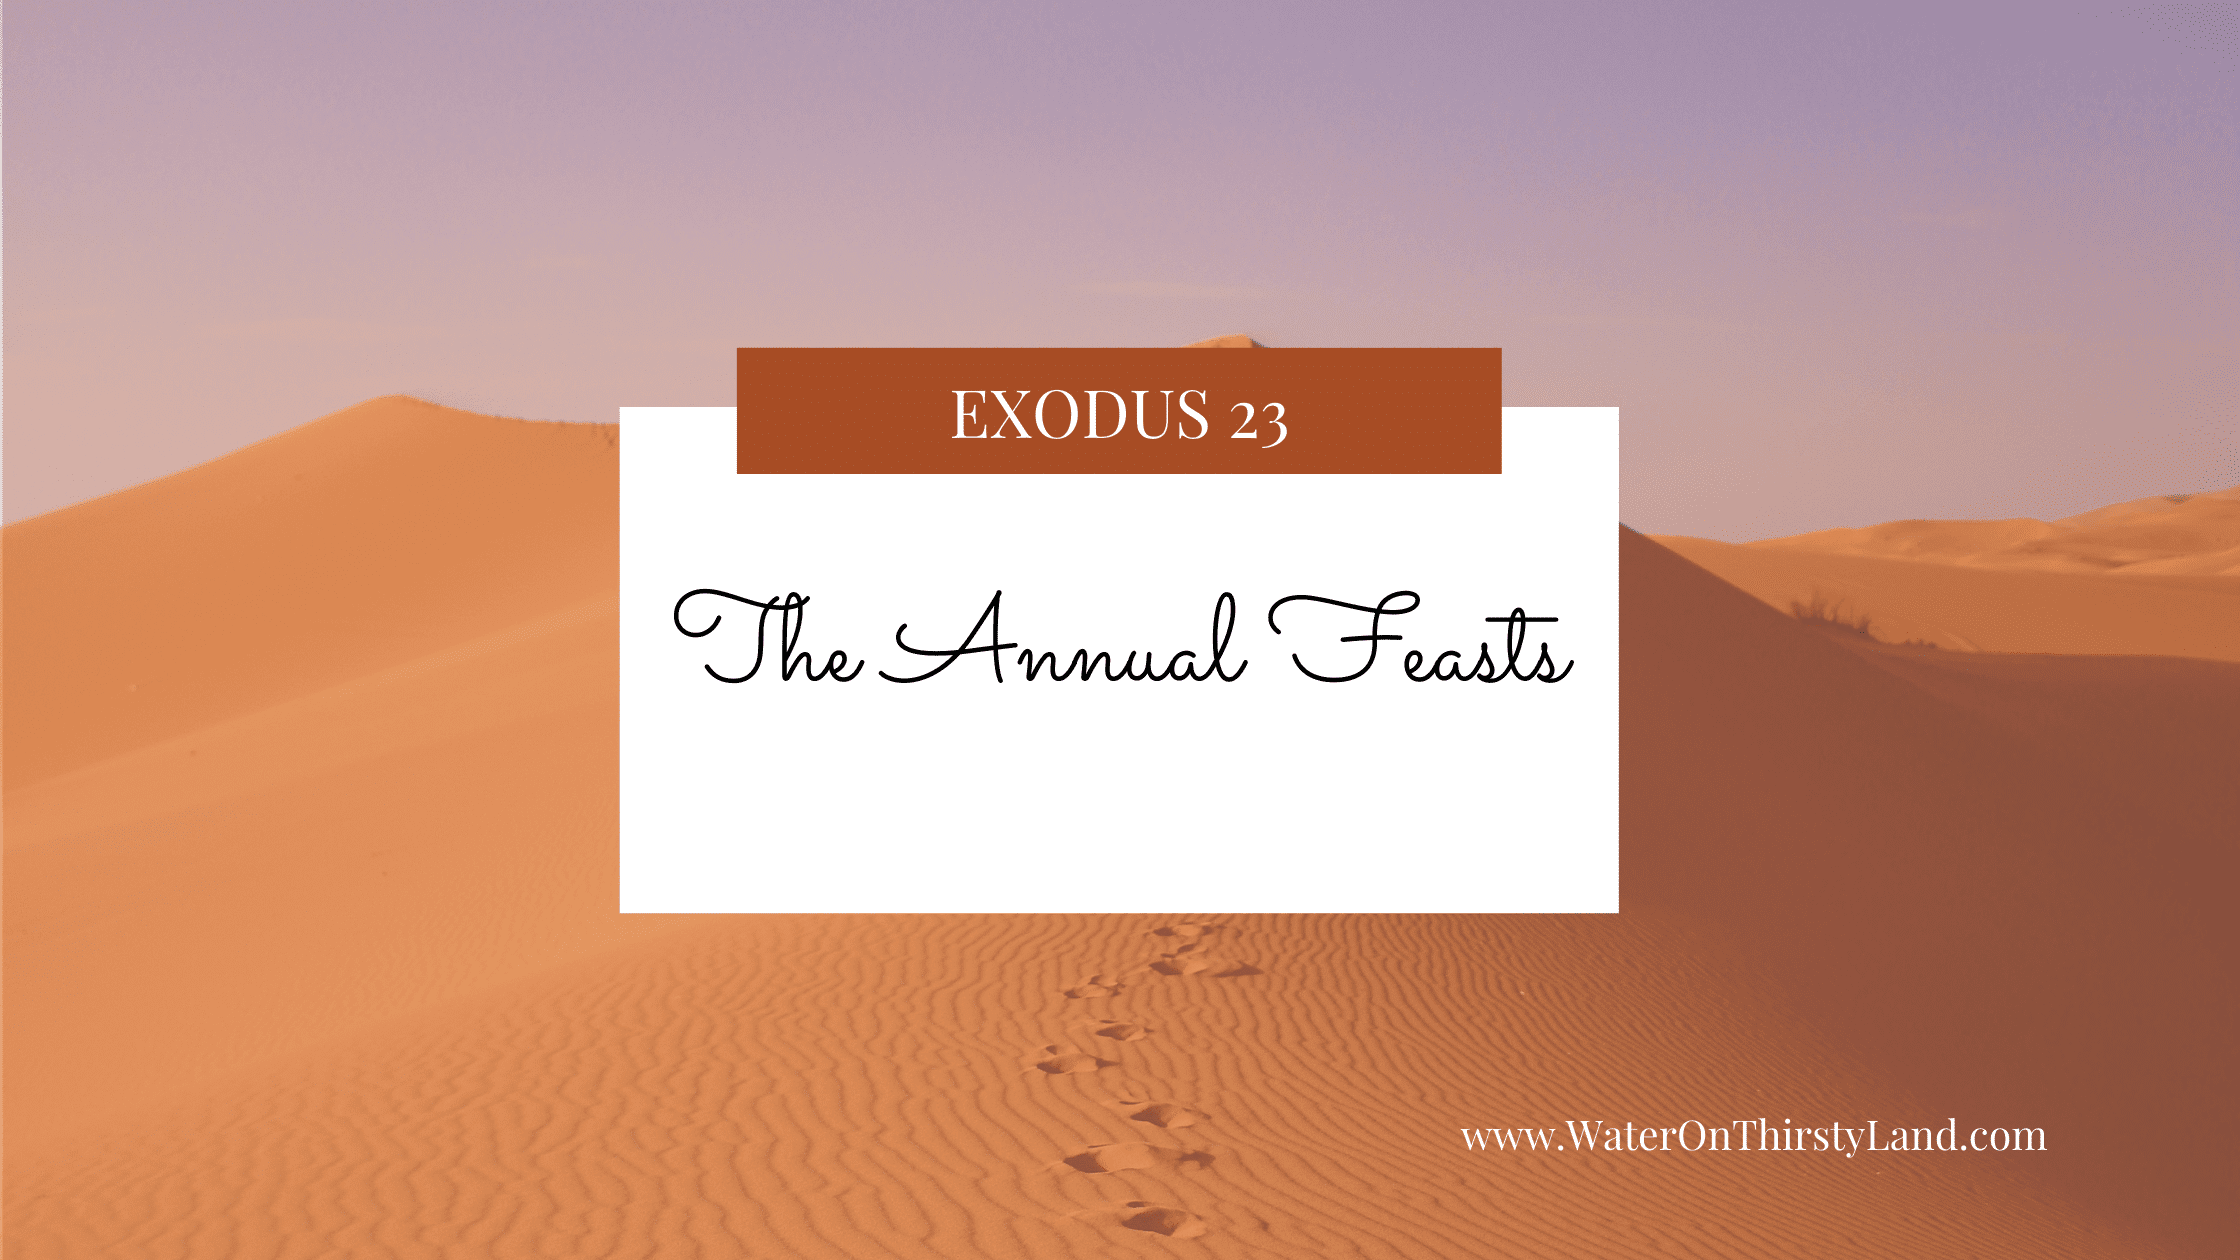 Exodus 23: The Annual Feasts